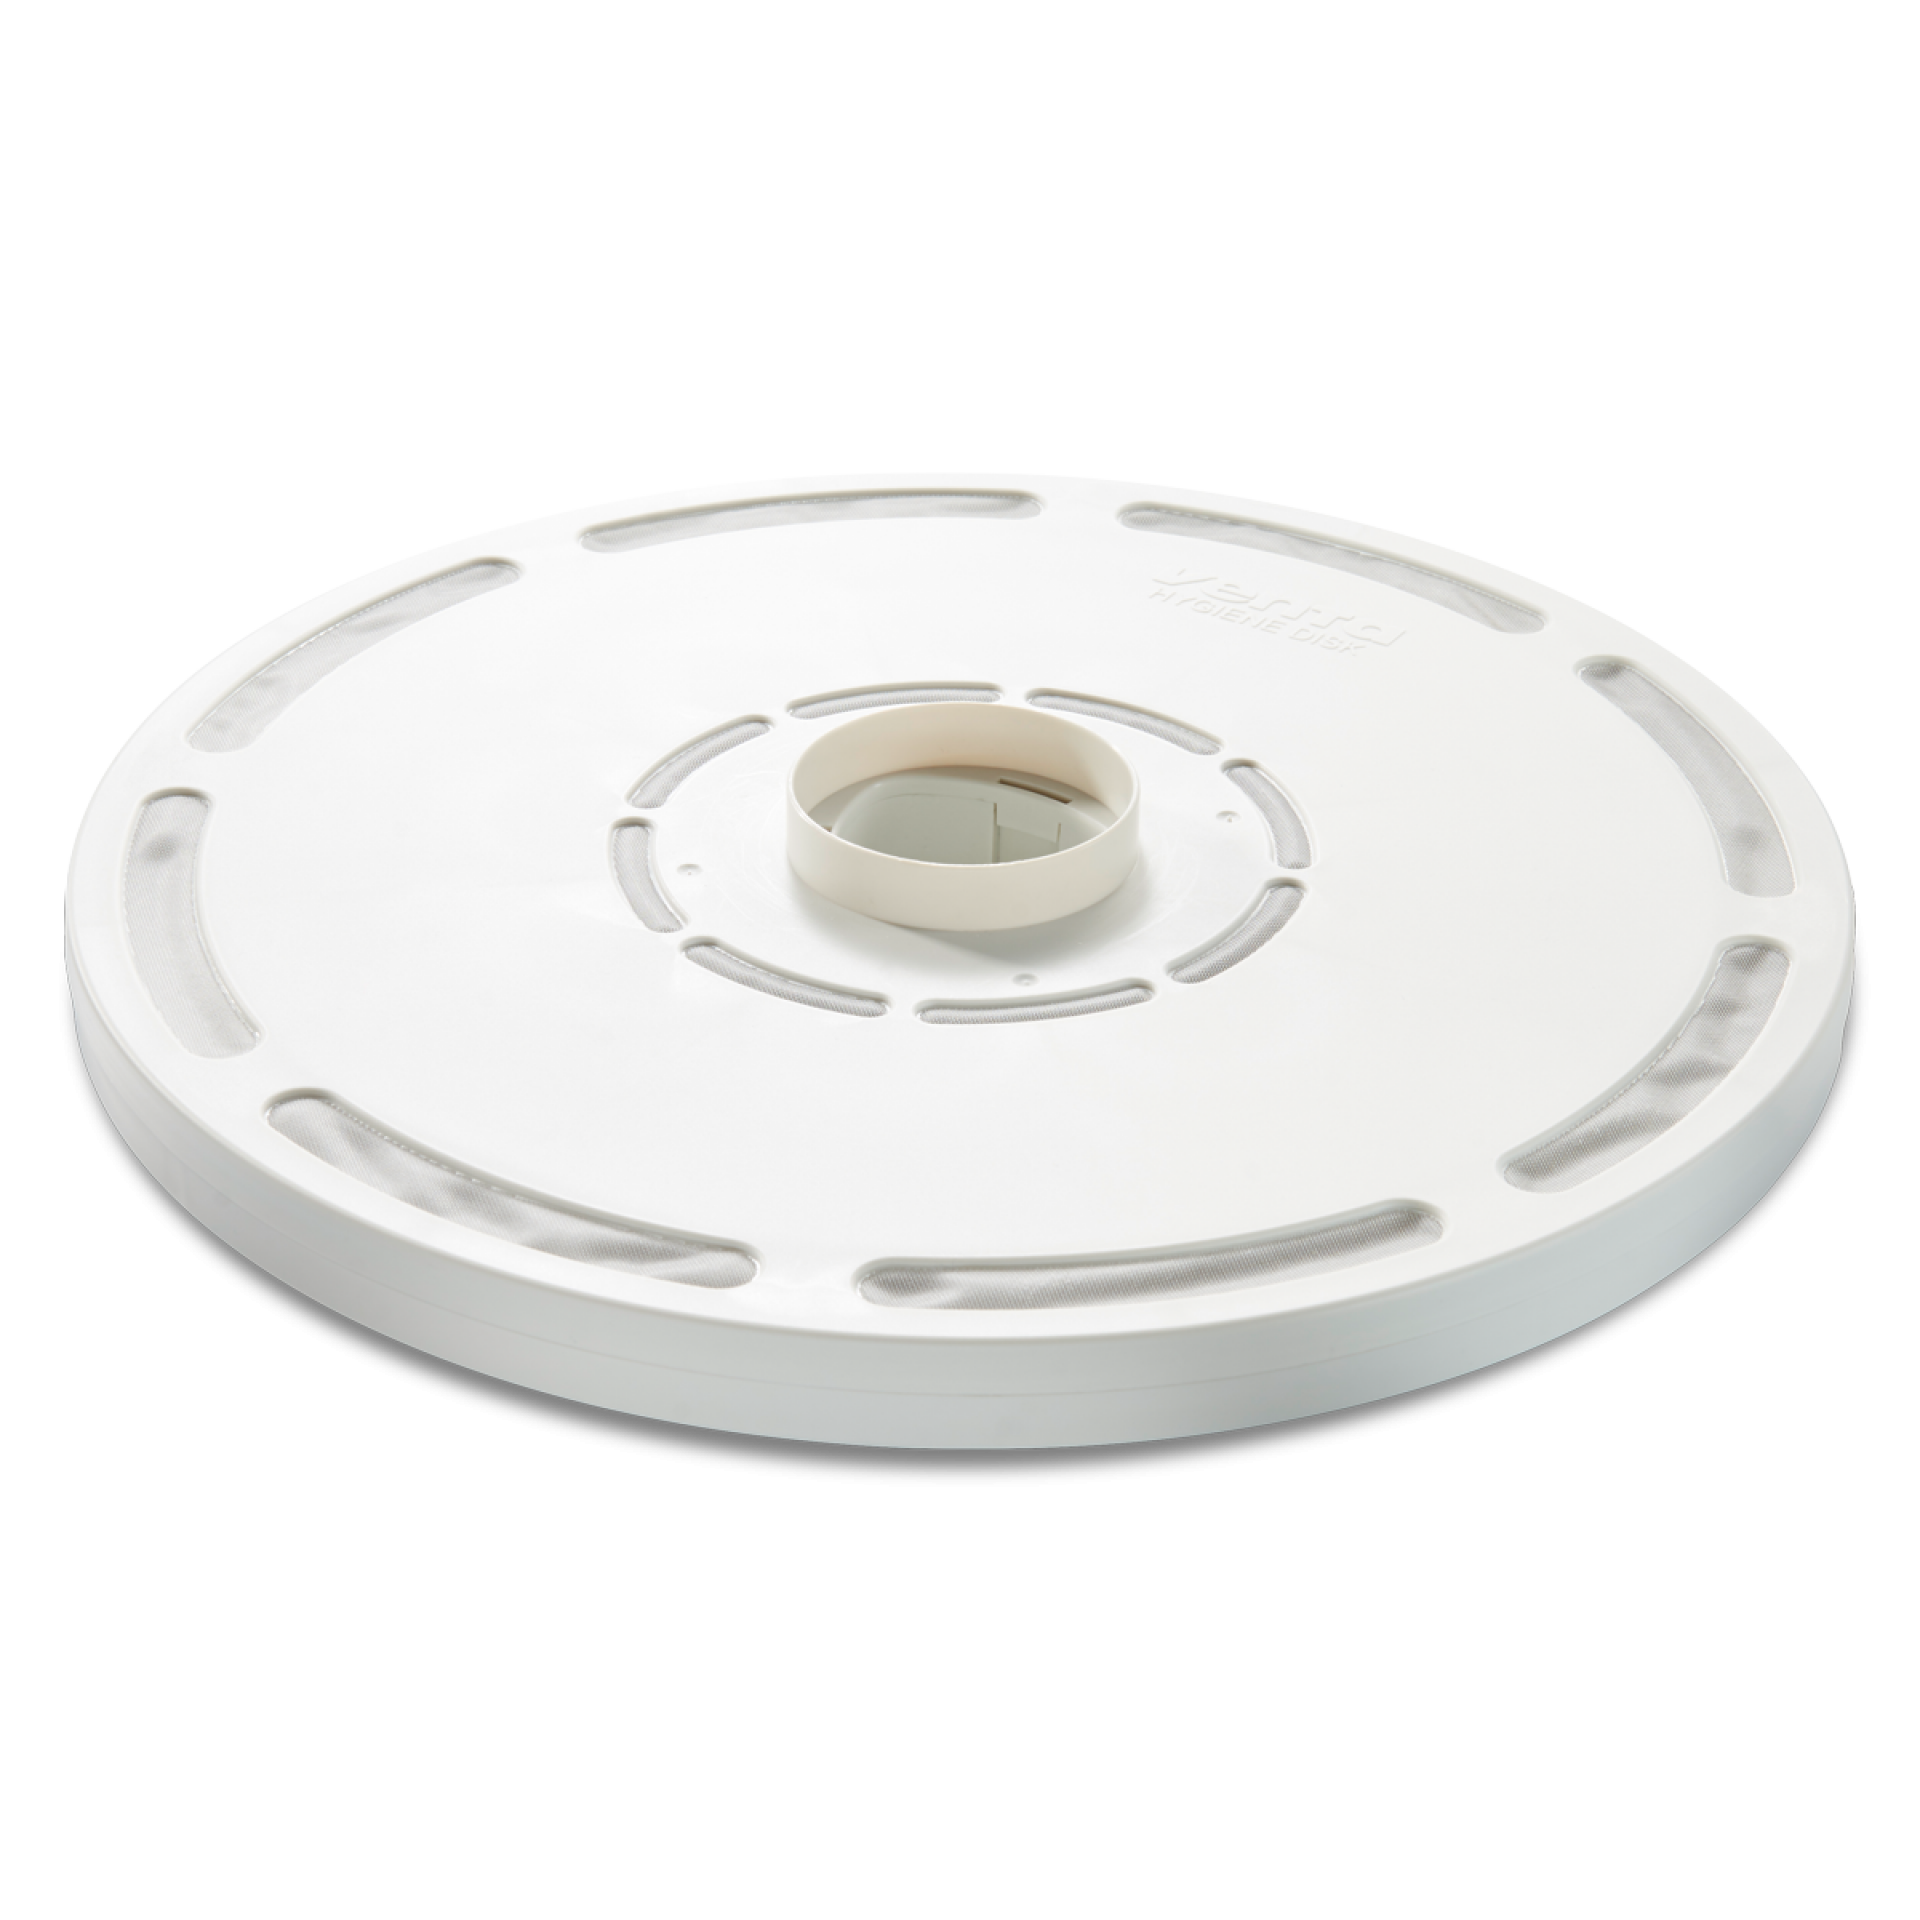 Venta Hygiene Disk 1x for Airwasher App Control